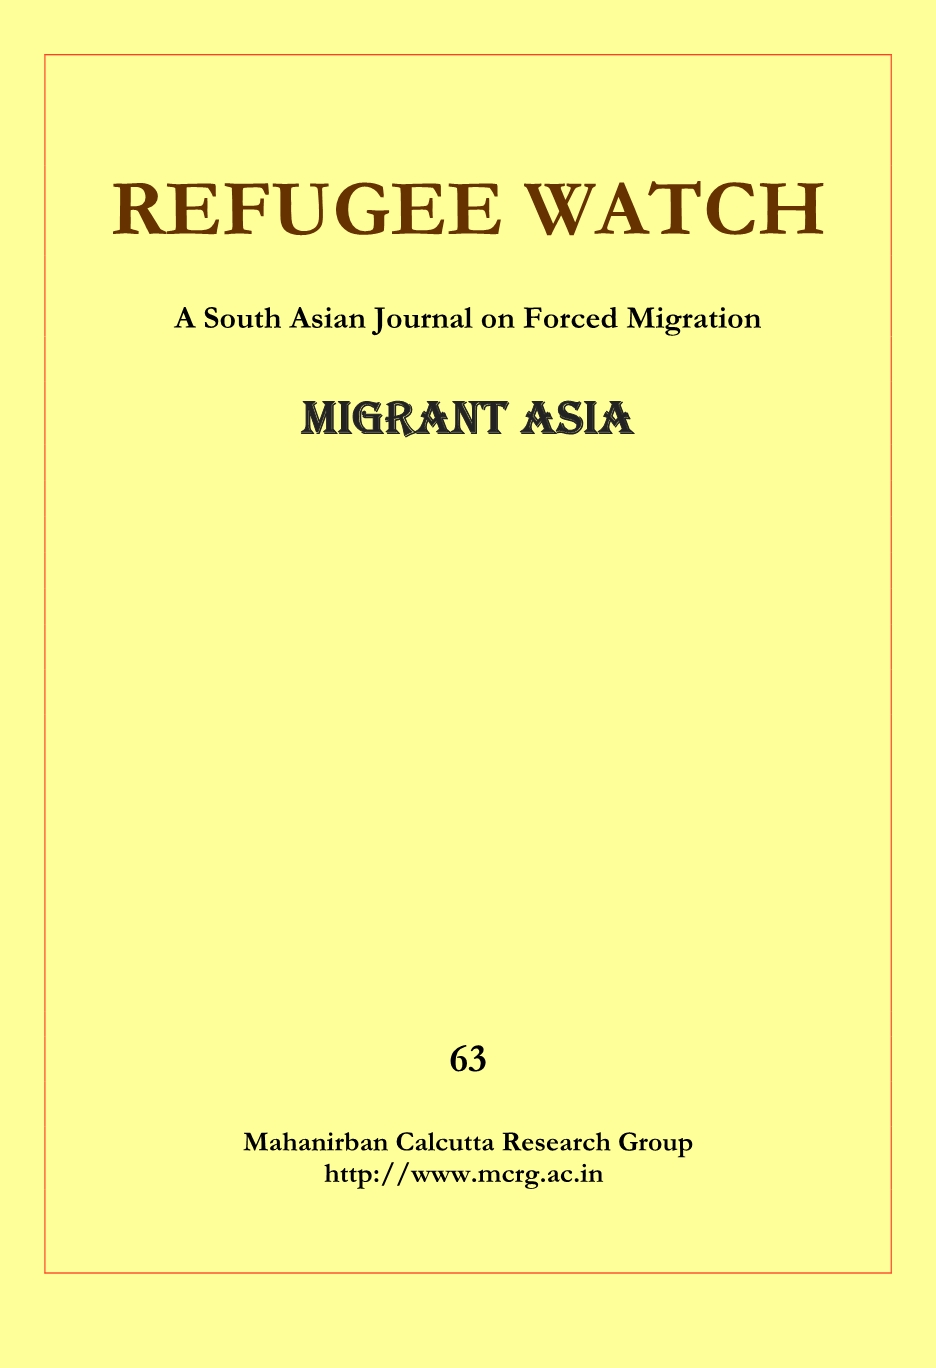 Current Refugee Watch